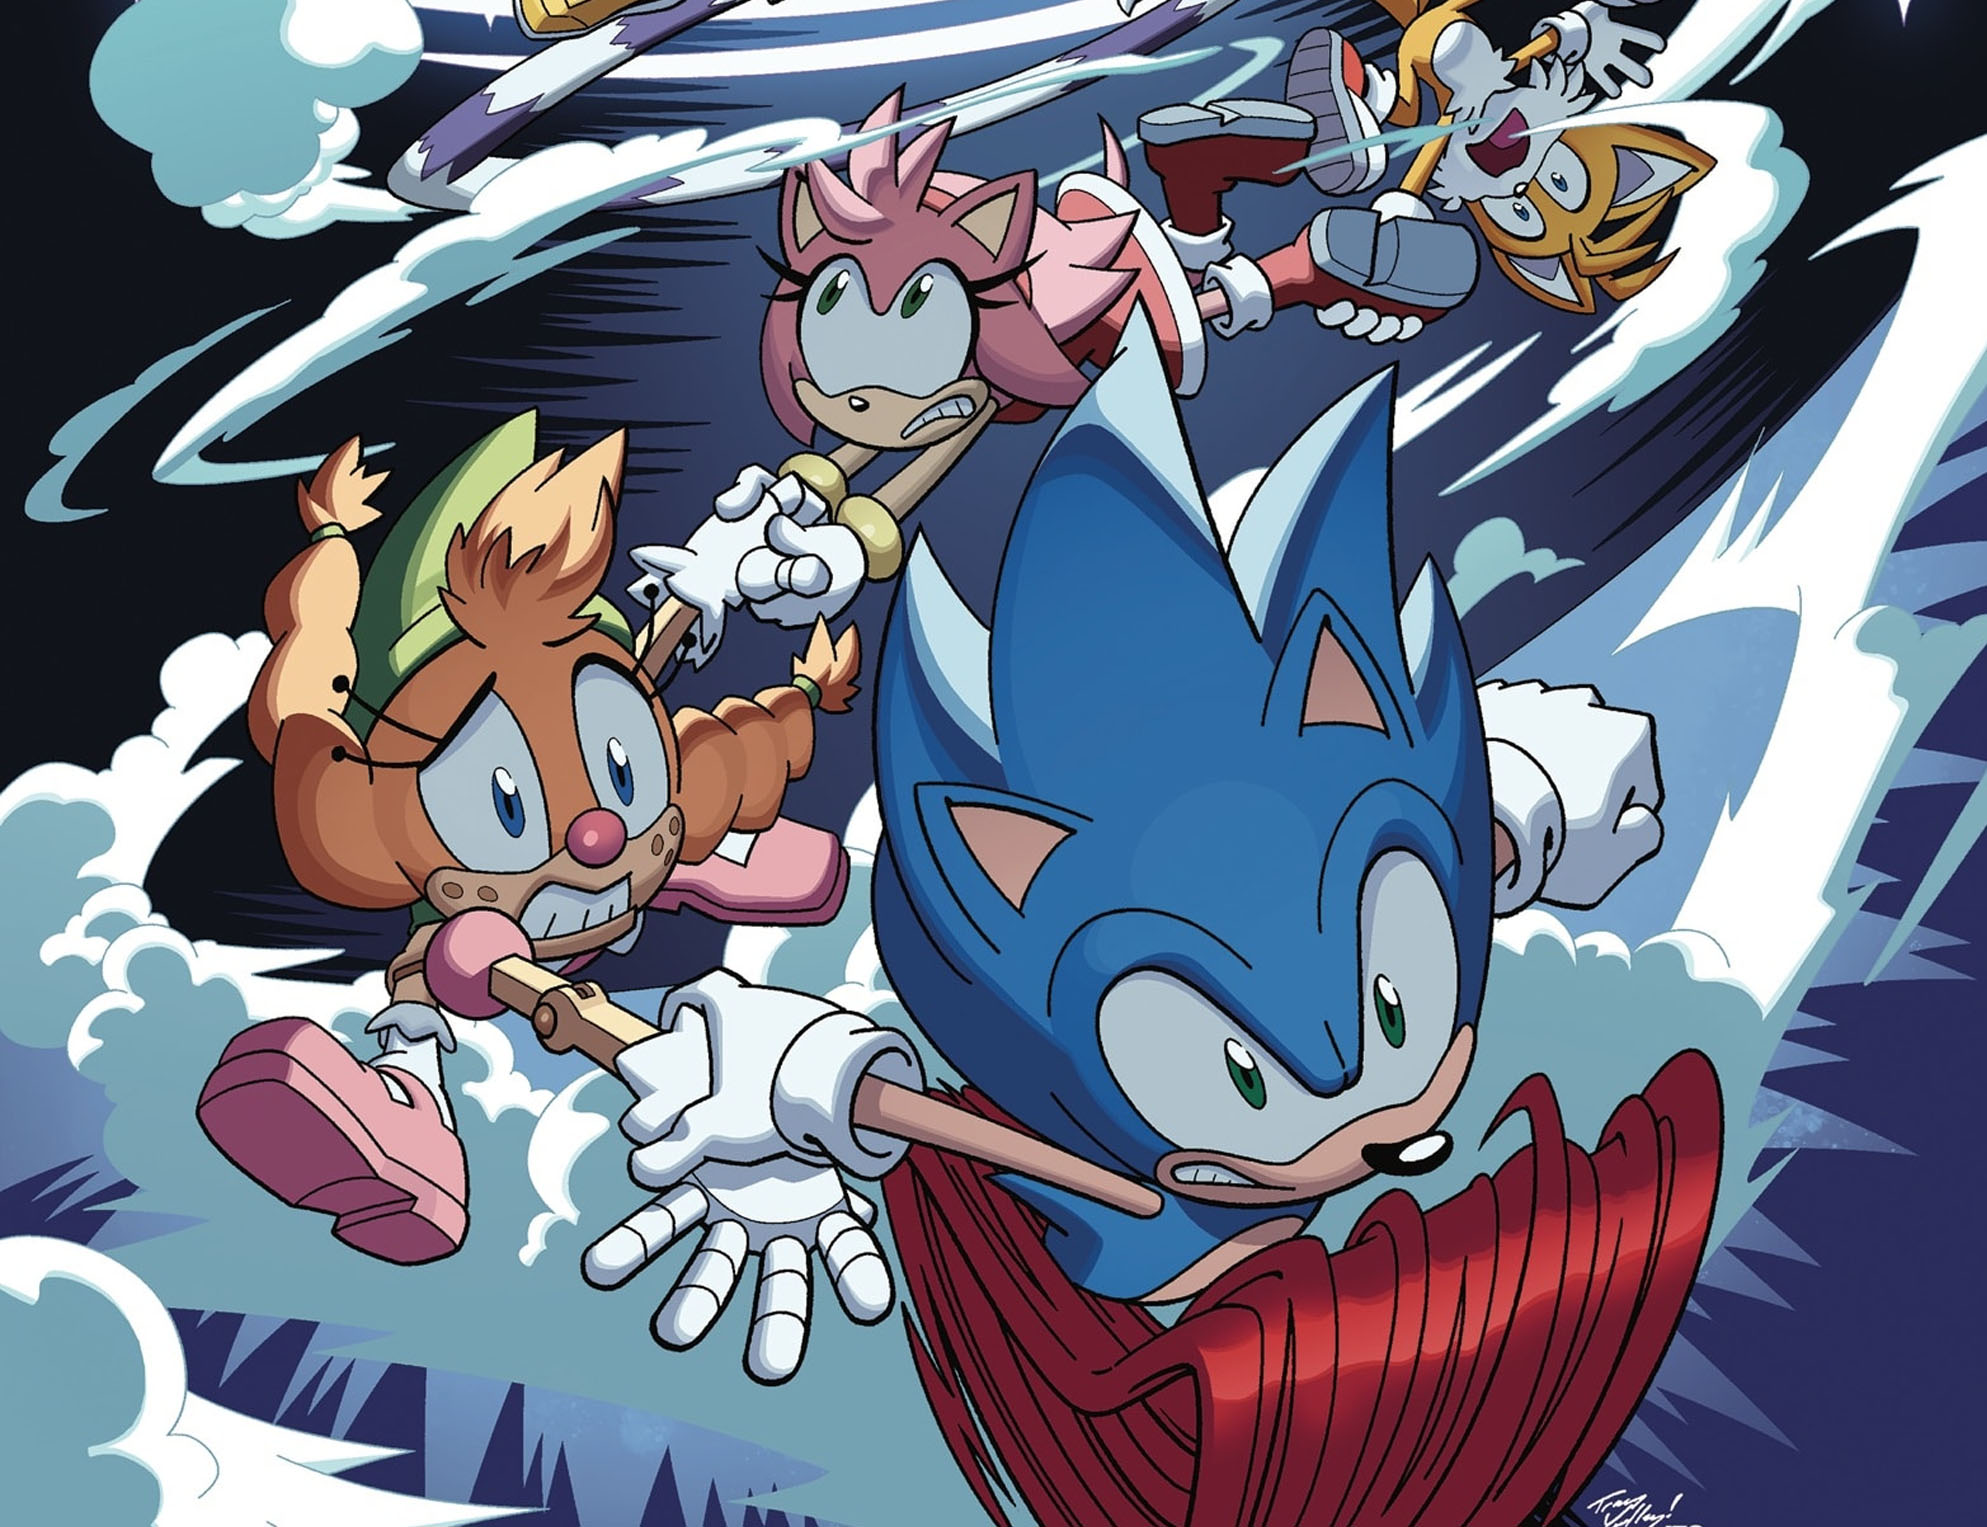 'Sonic the Hedgehog' #40 is quintessential Sonic comics